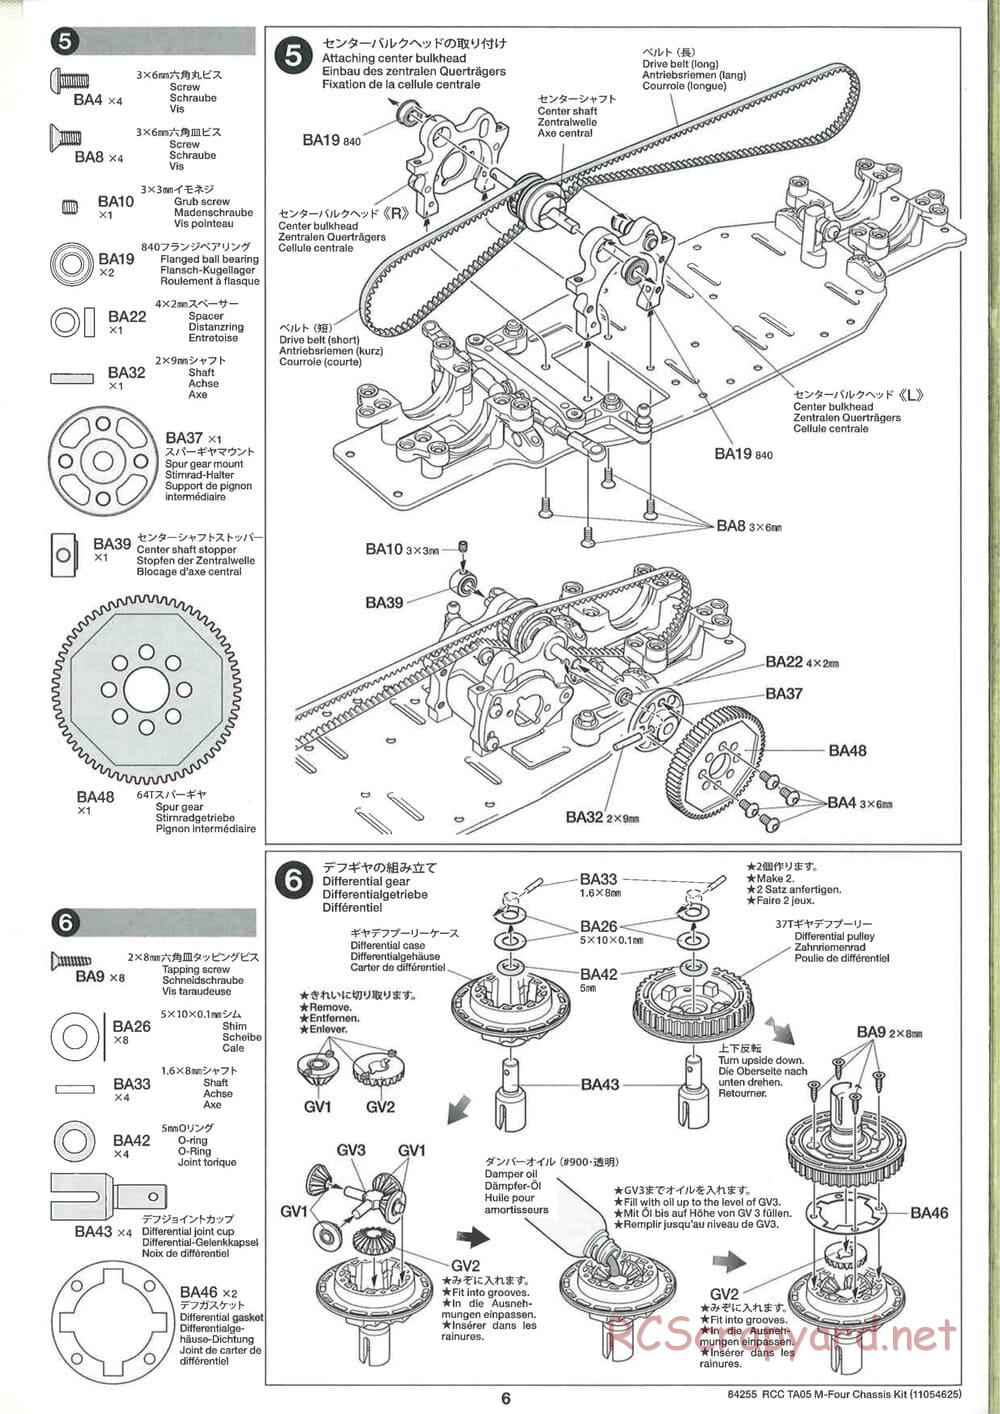 Tamiya - TA05 M-Four Chassis - Manual - Page 6